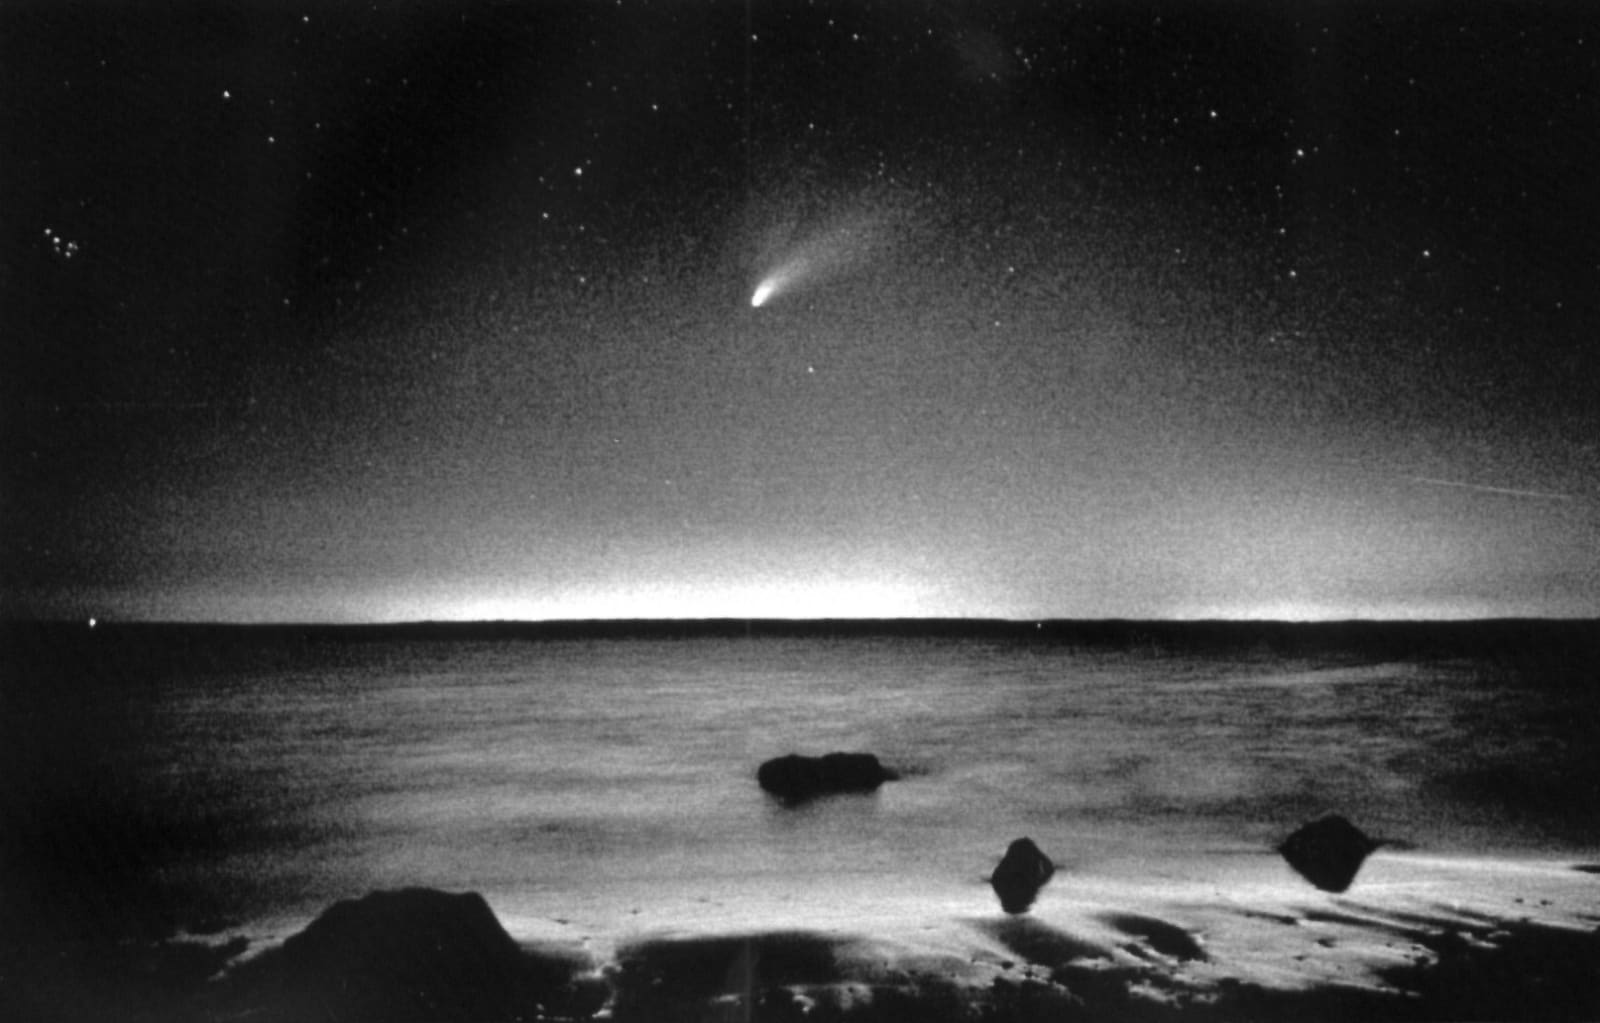 Stephen DiRado, Celestial Series, Comet Hale-Bopp, Lamberts Cove Beach, West Tisbury, MA, April 4, 1997, 9:10pm, EST.